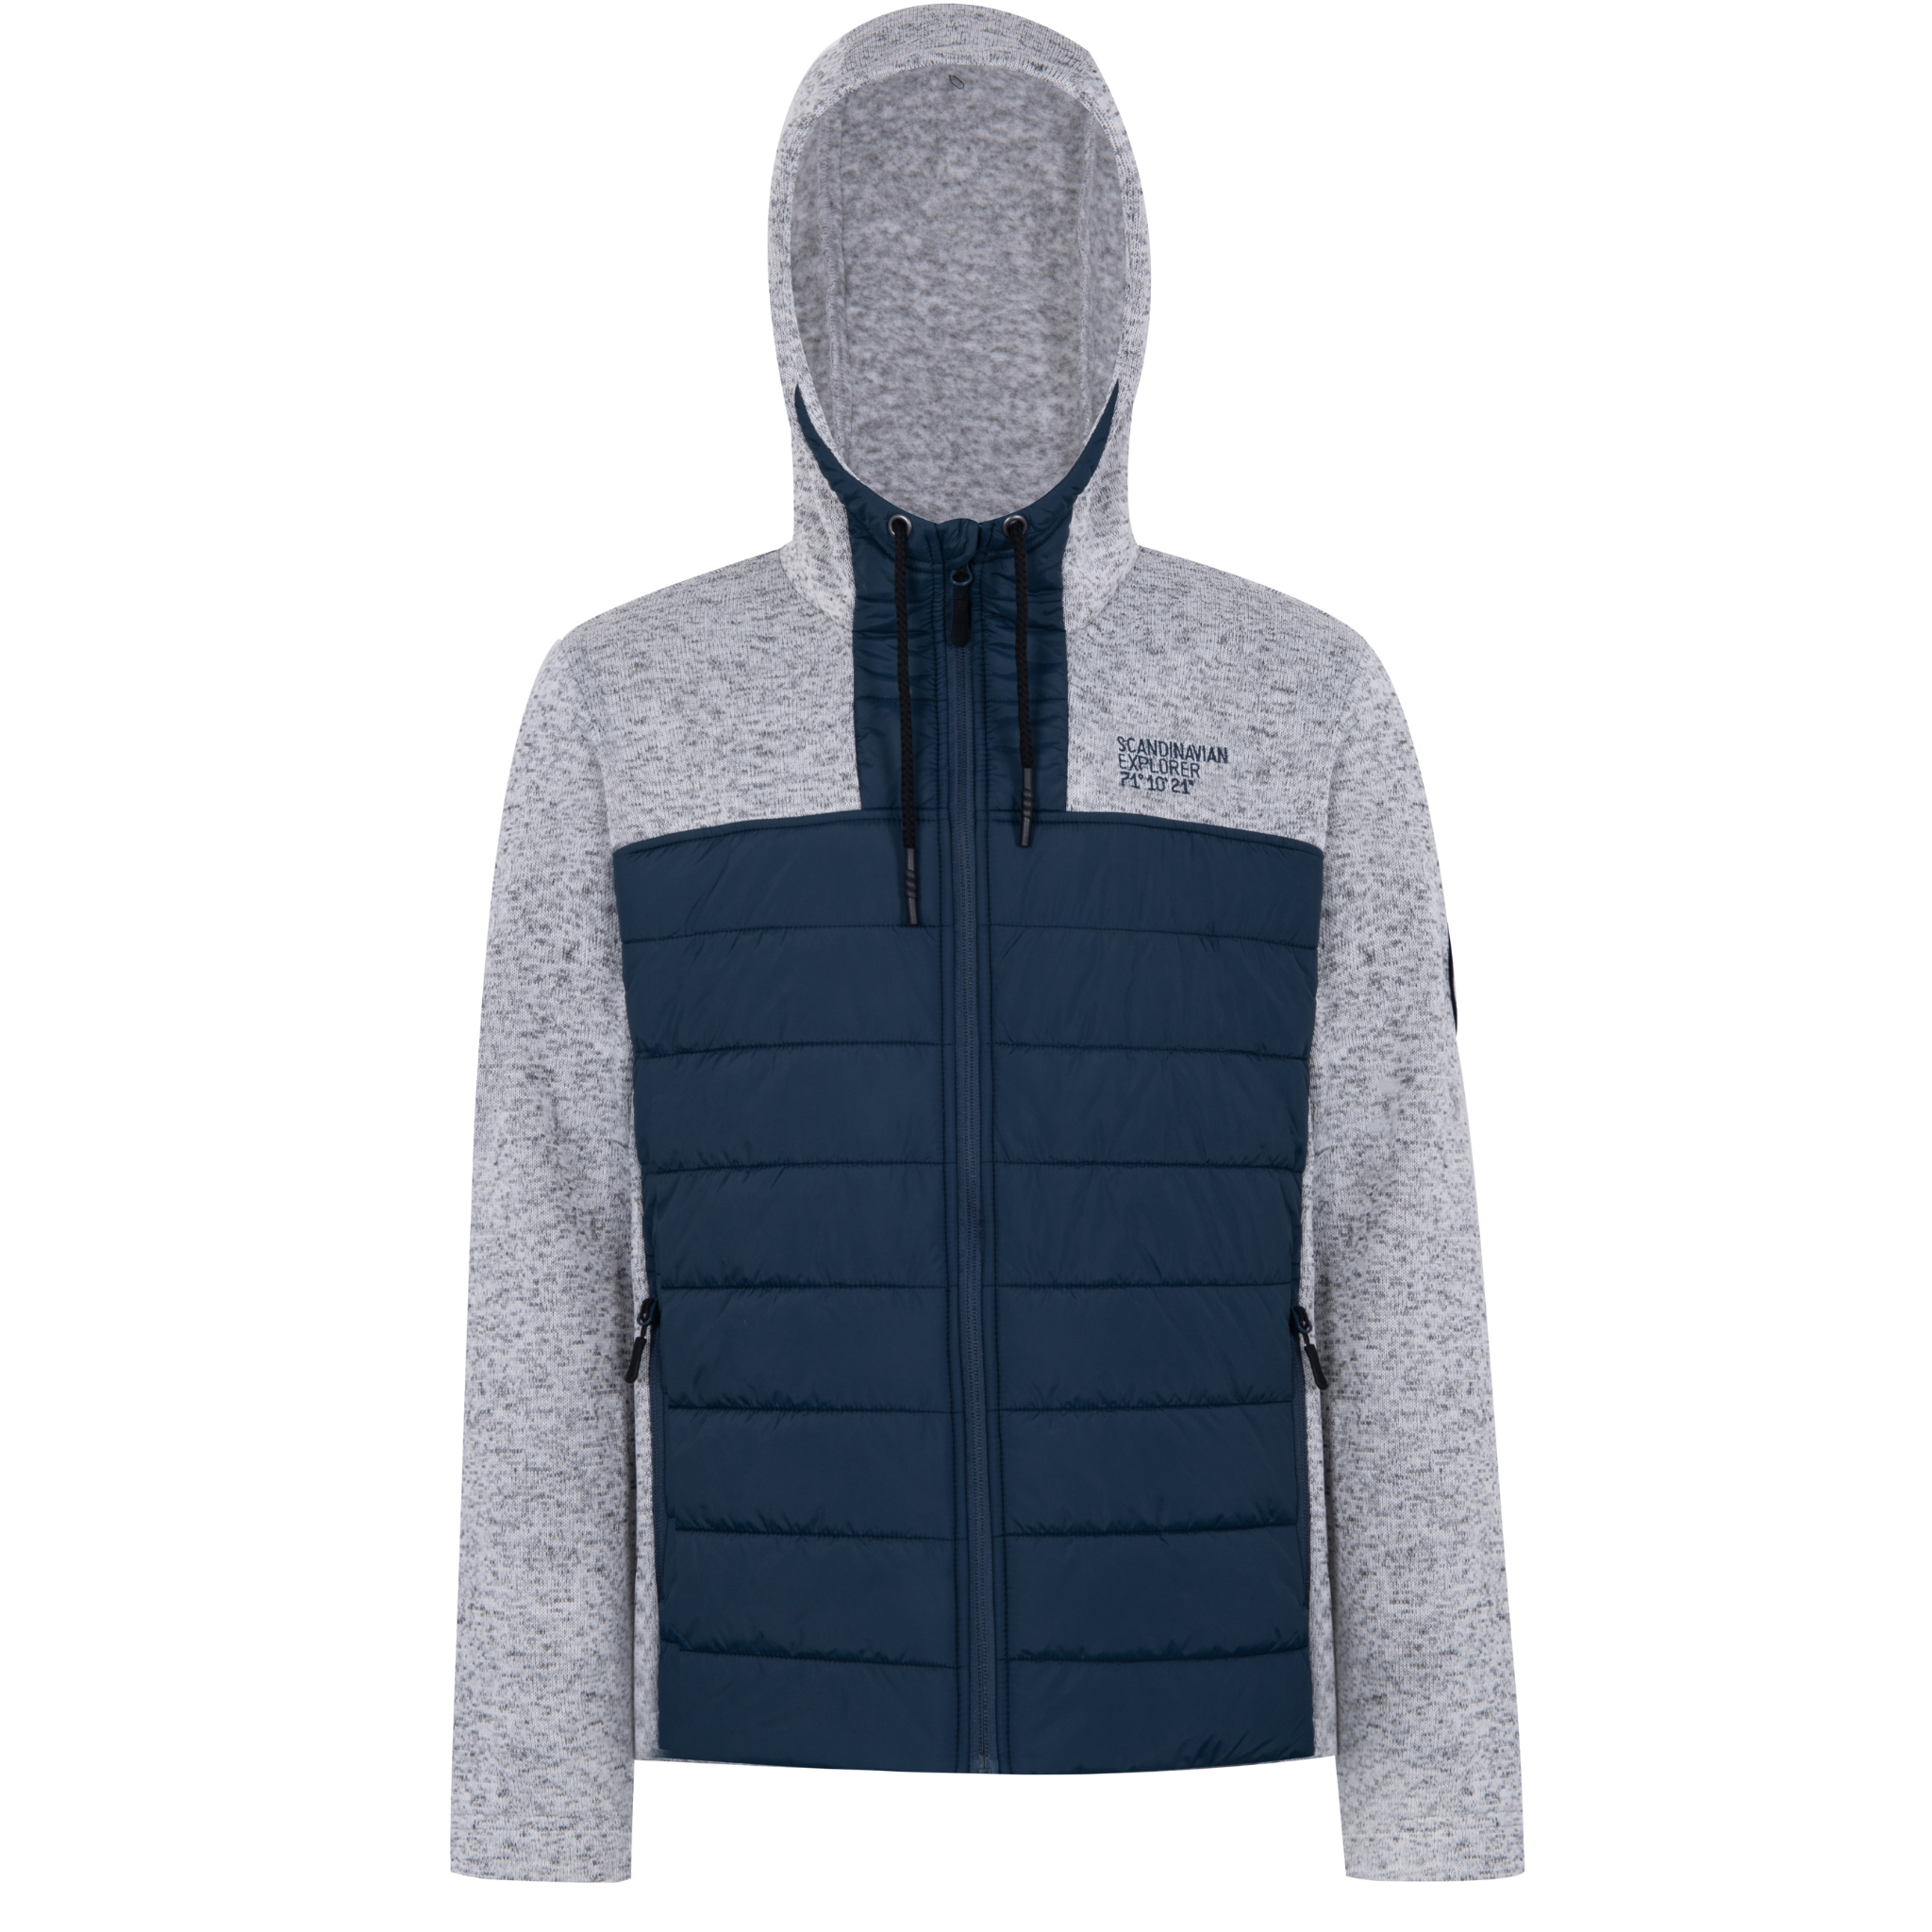 combination hybrid fleece jacket zip